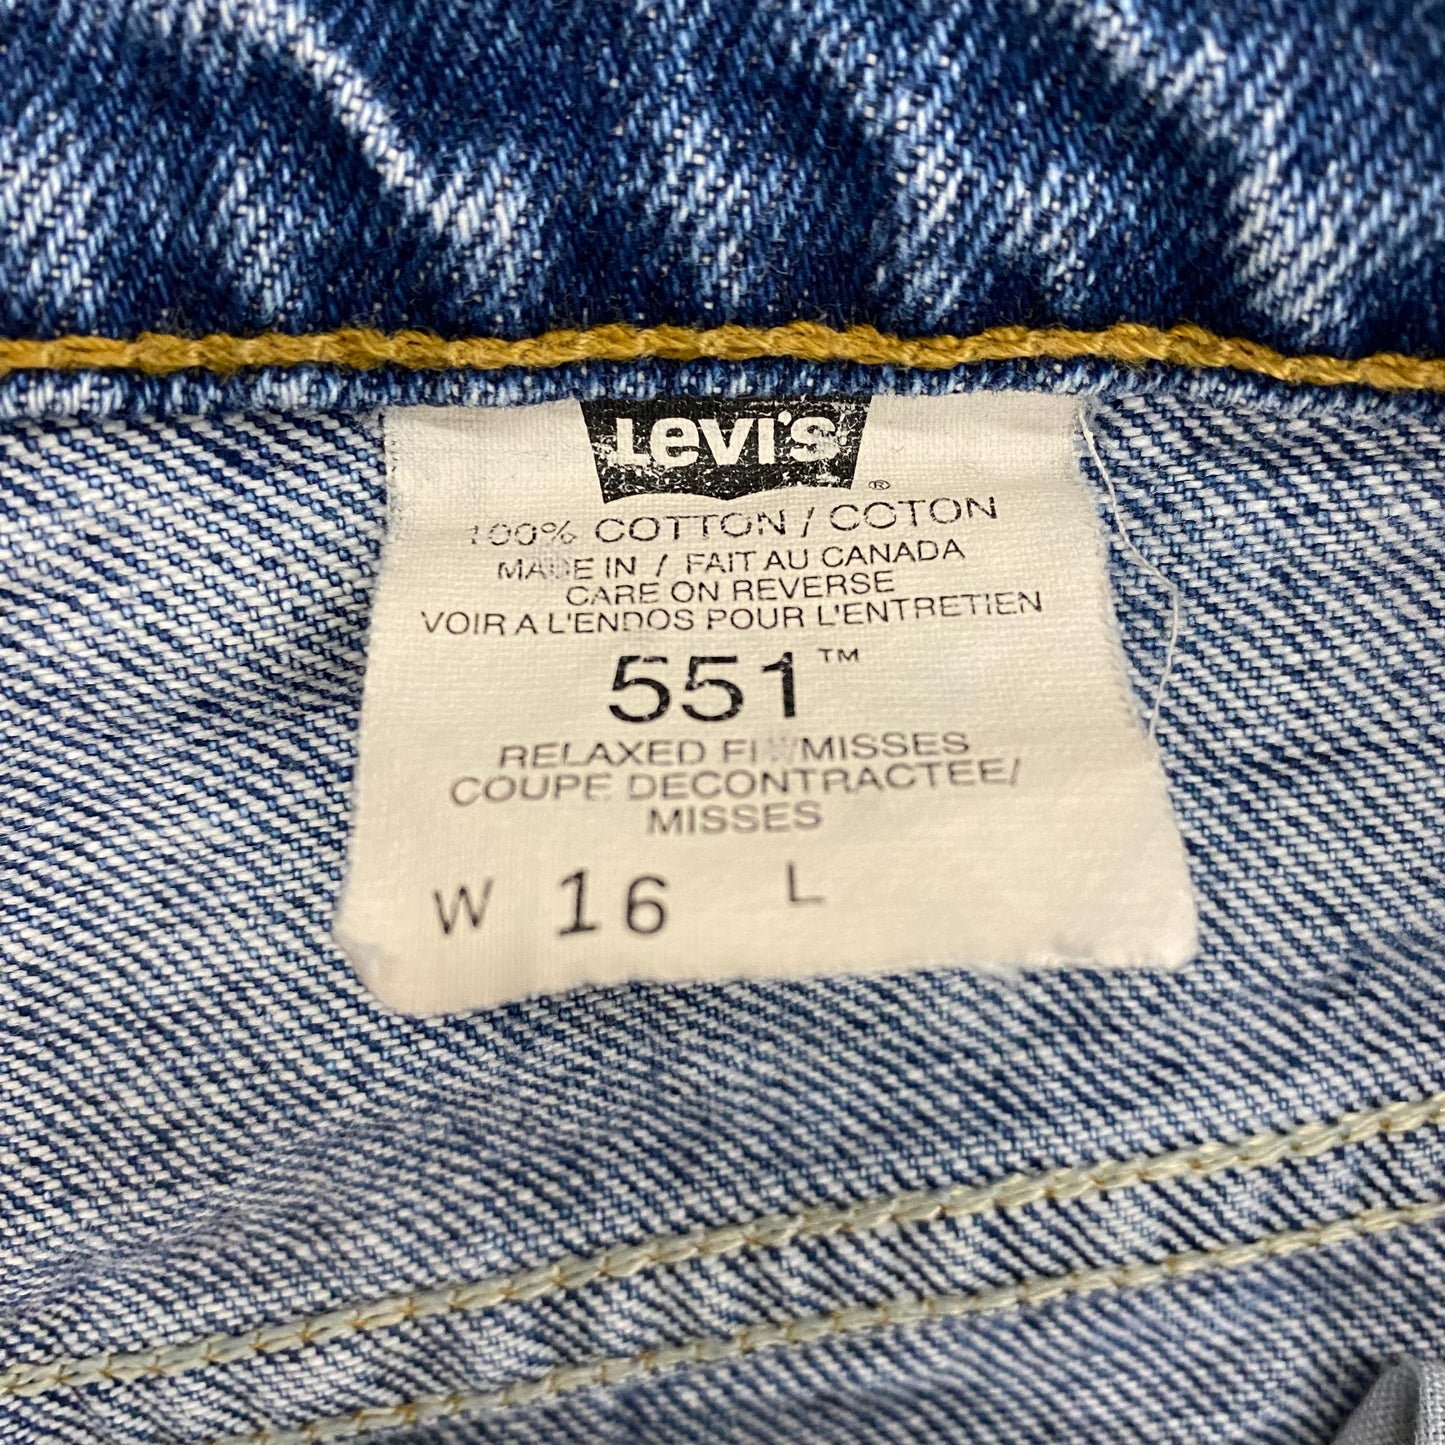 Vintage Levi's 551 Jean Shorts with Lace Hem - 33"x3"